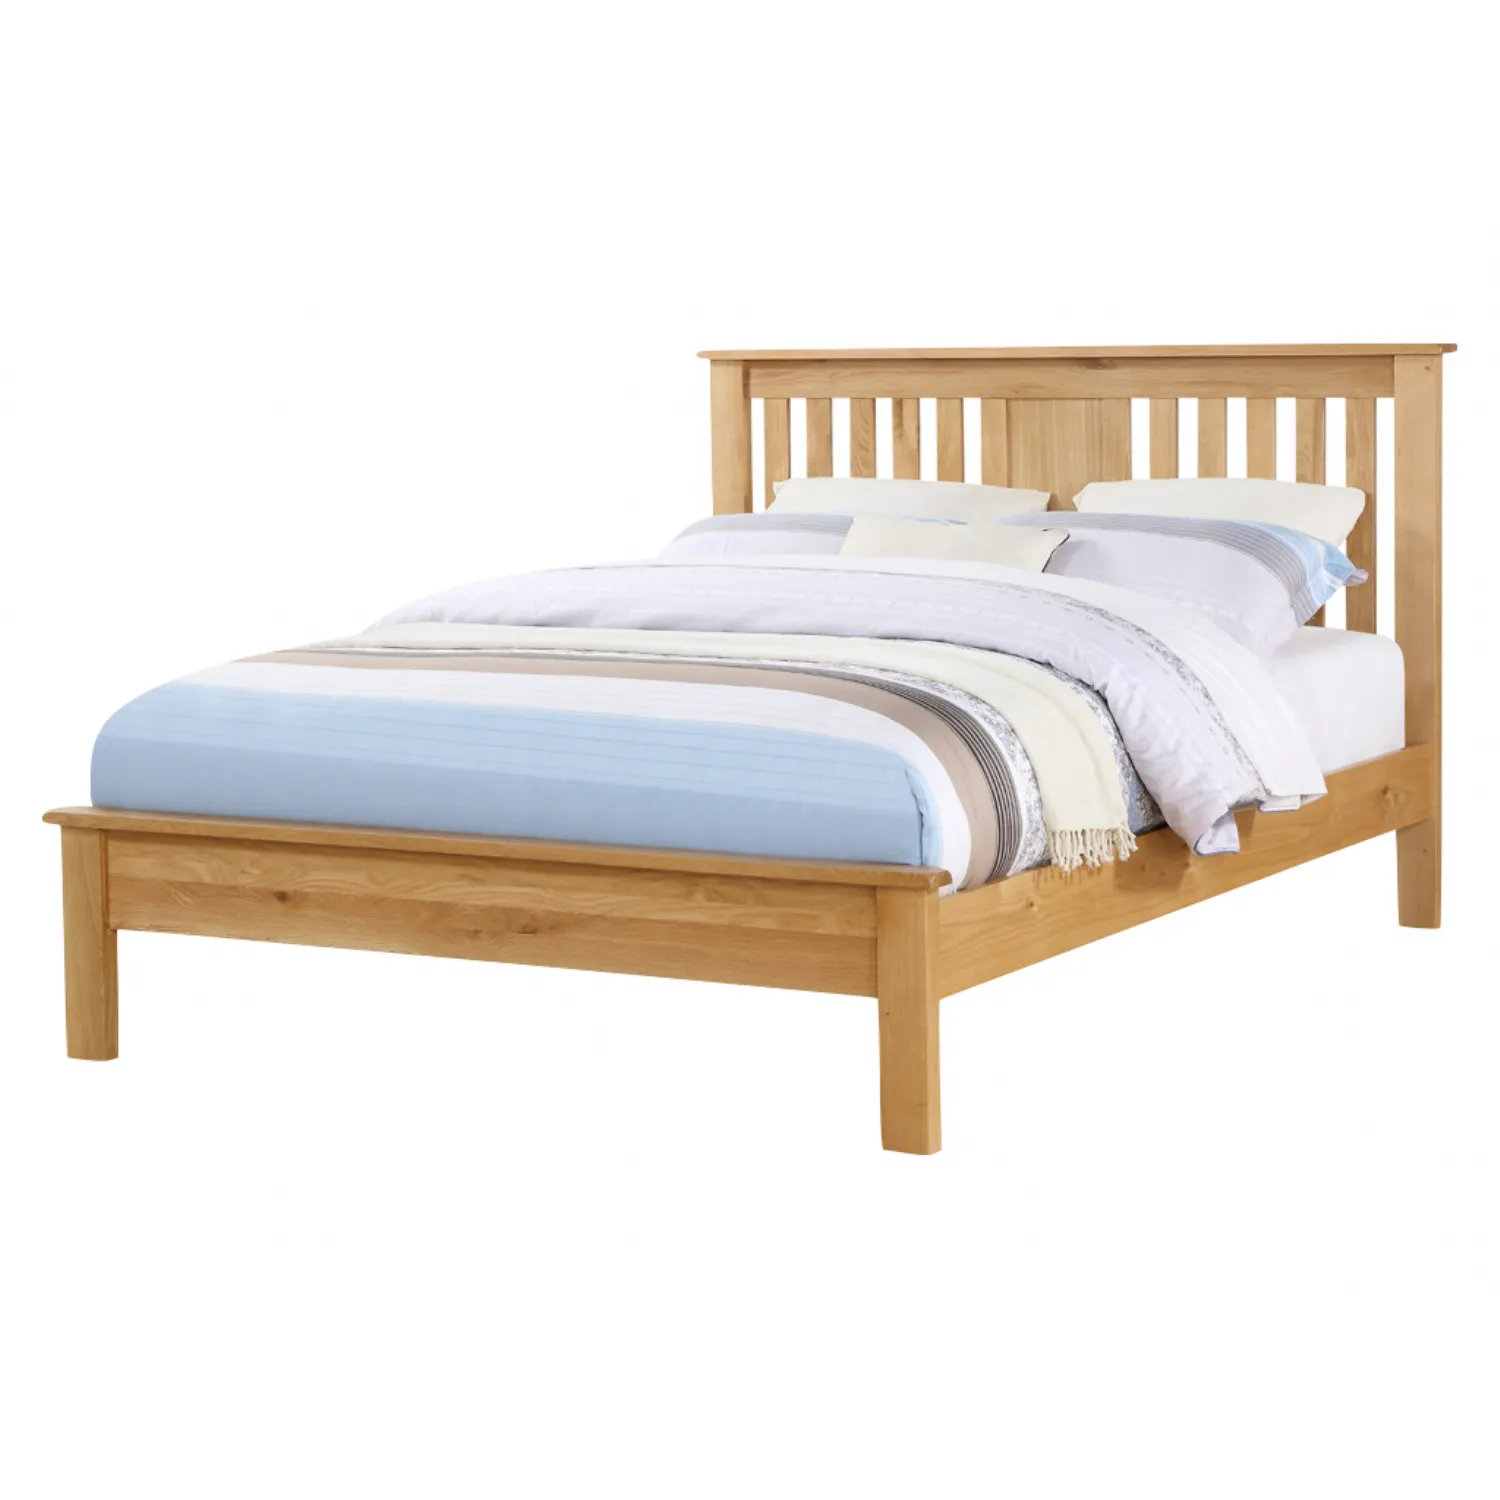 Solid Oak 5ft Bed Low End Bed